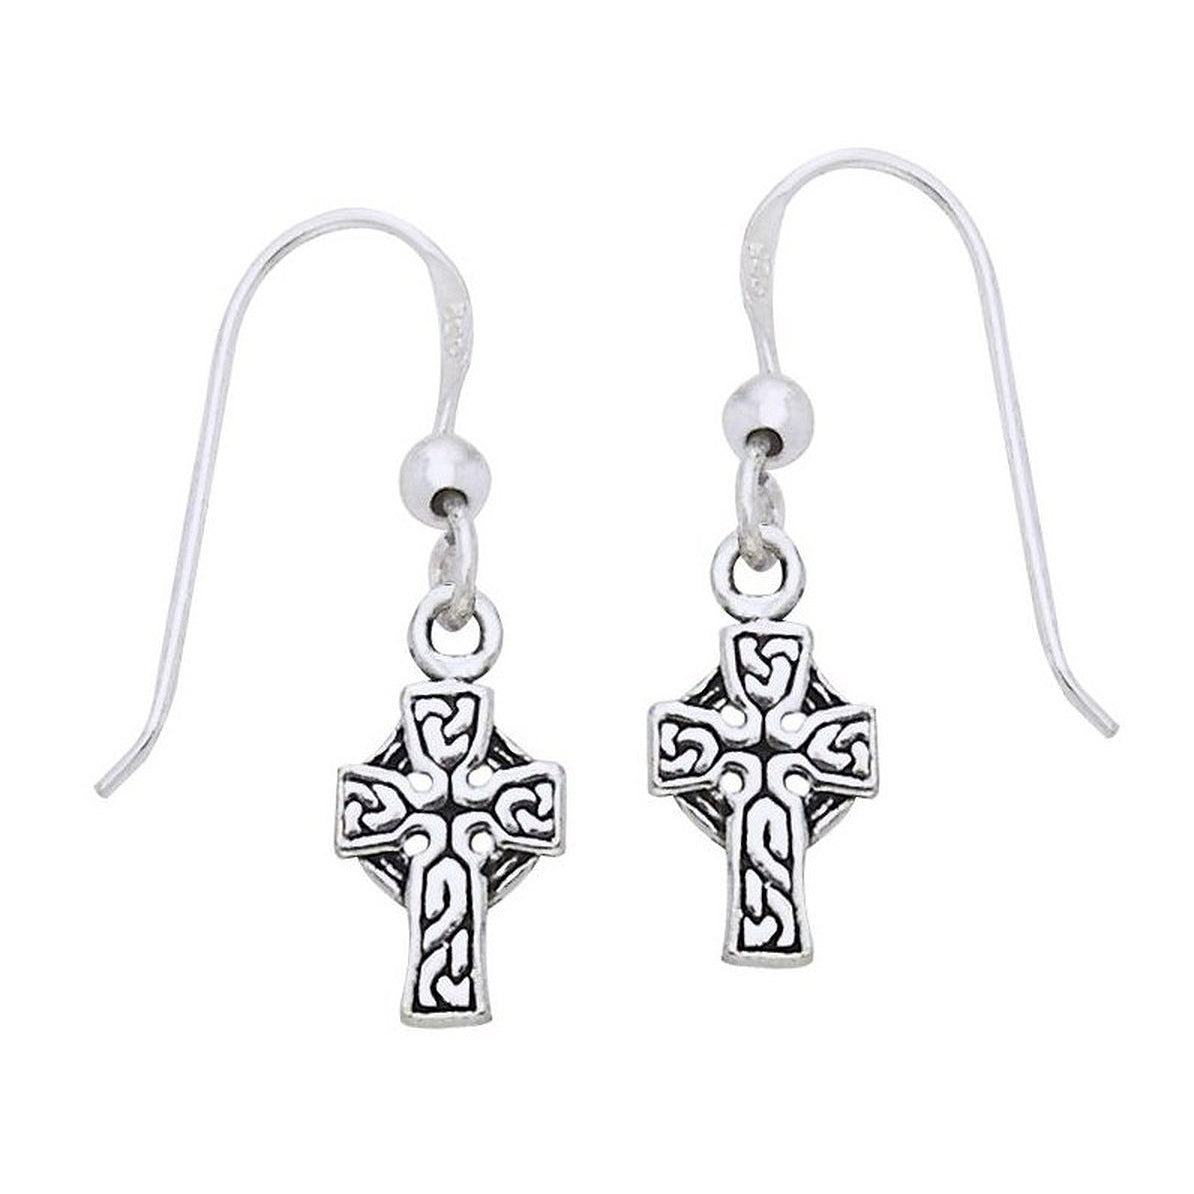 Small Sterling Silver Irish Celtic Knot Cross Hook Earrings - Silver Insanity